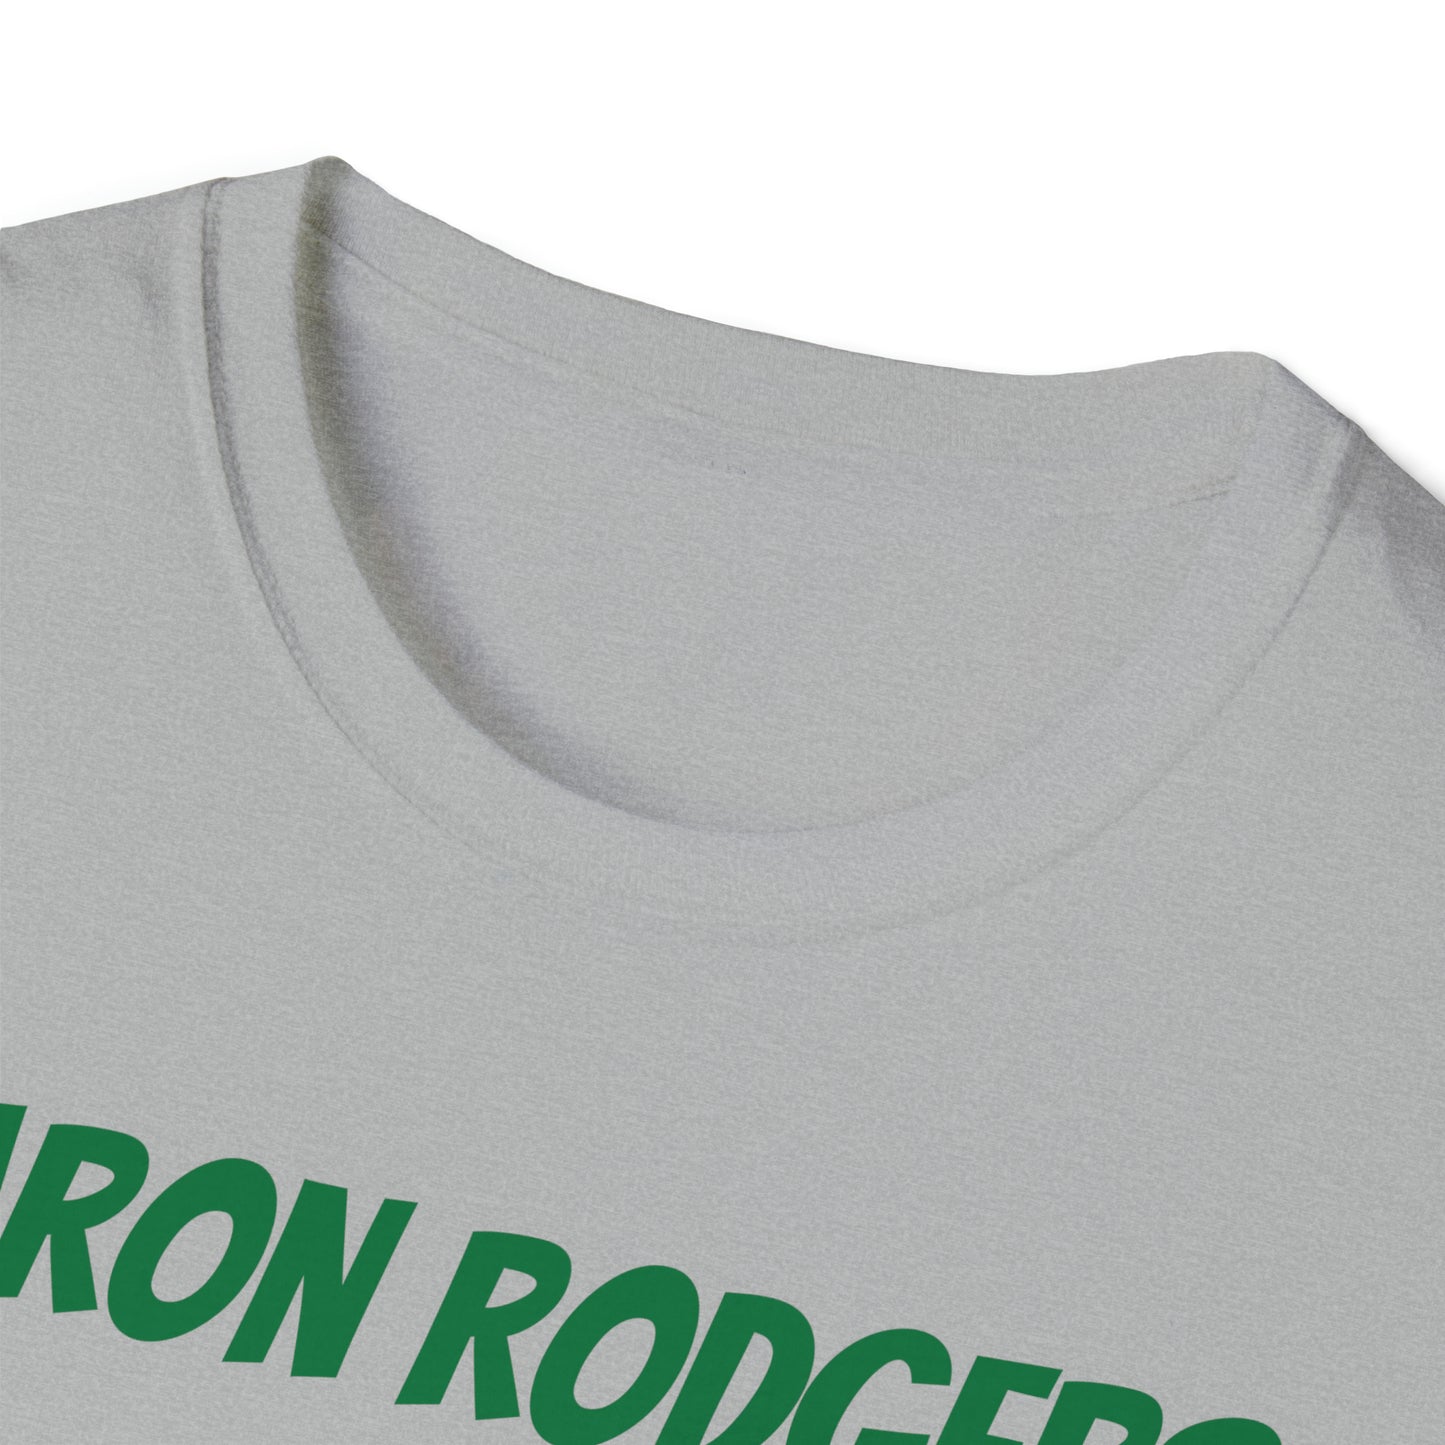 Aaron Rodgers Is Still Good Shirt